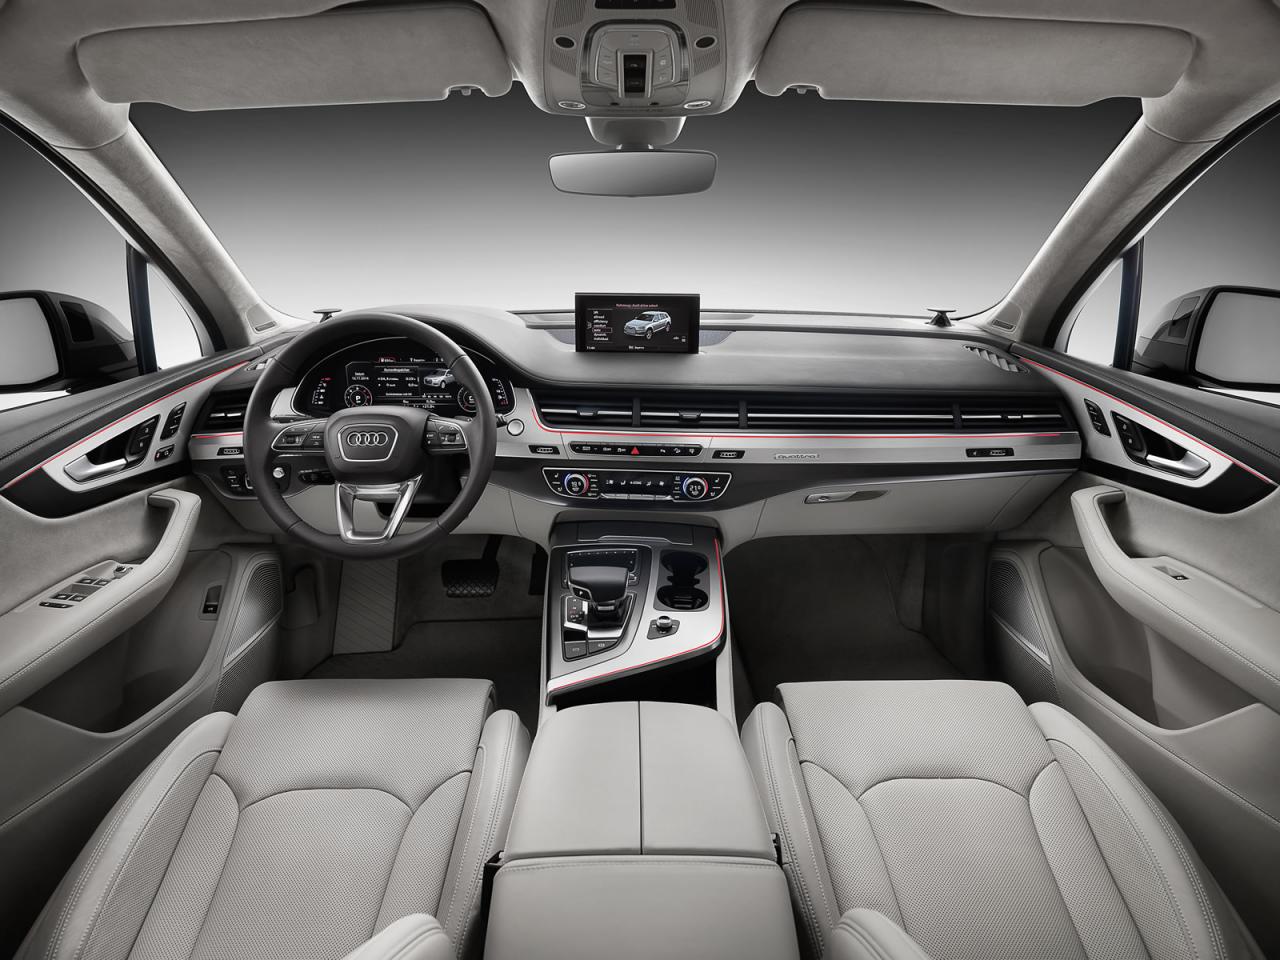 http://www.pedal.ir/wp-content/uploads/2015-Audi-Q7-interior-01.jpg